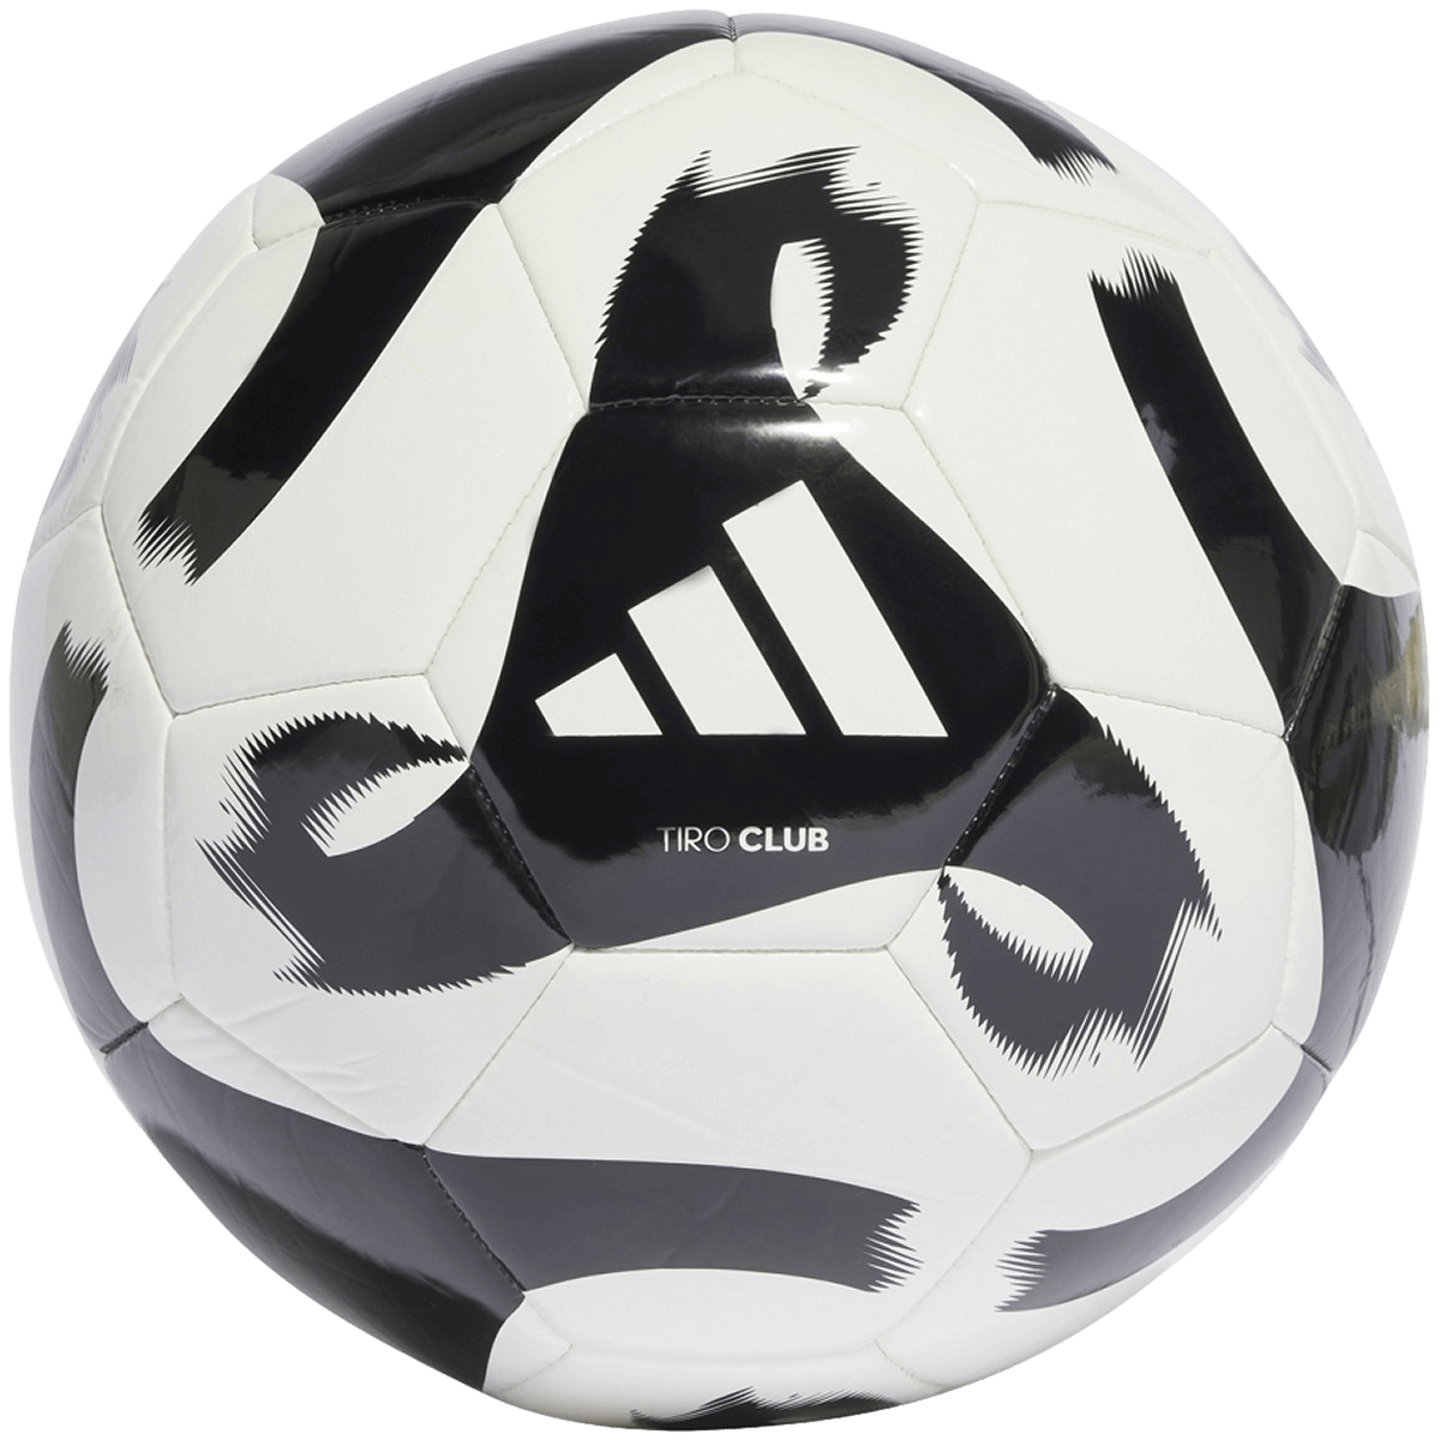 Adidas Tiro Club Soccer Ball